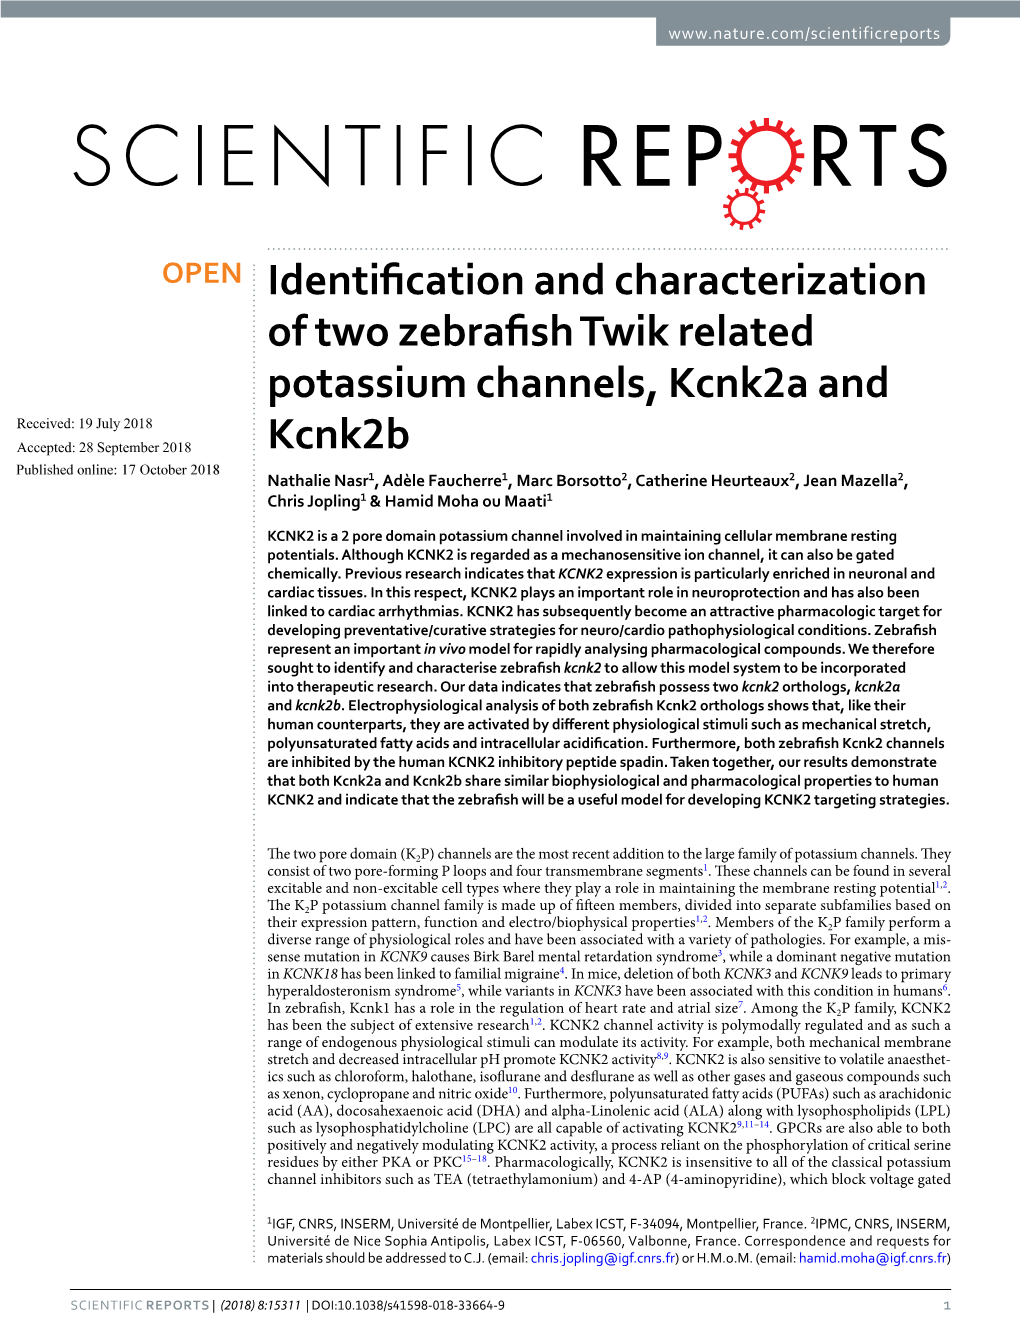 Identification and Characterization of Two Zebrafish Twik Related